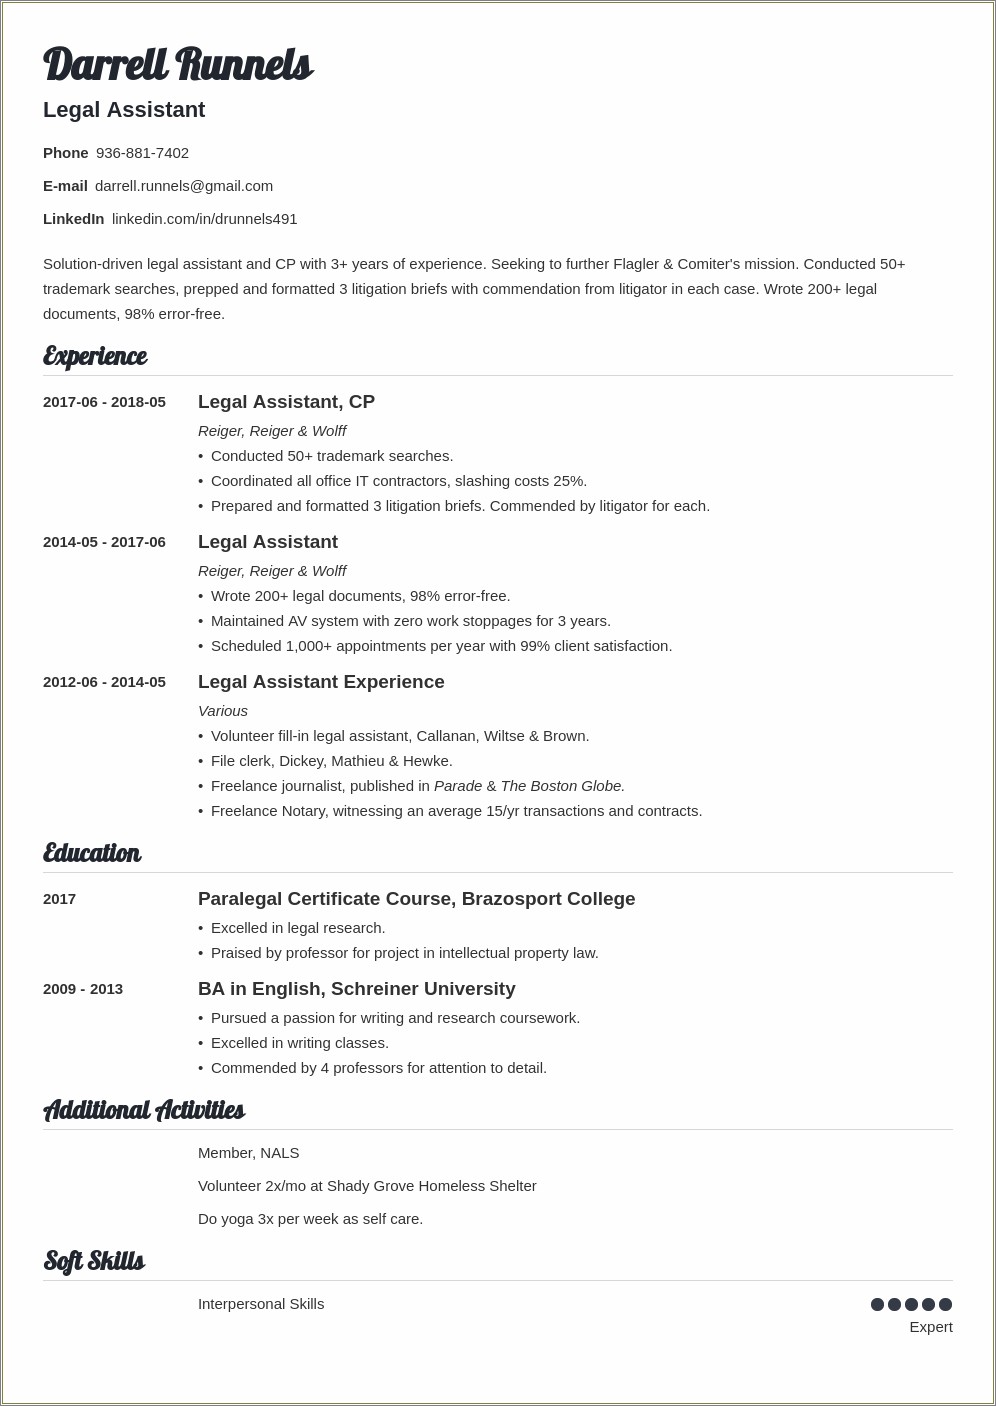 Resume Job Description For Legal Assistant